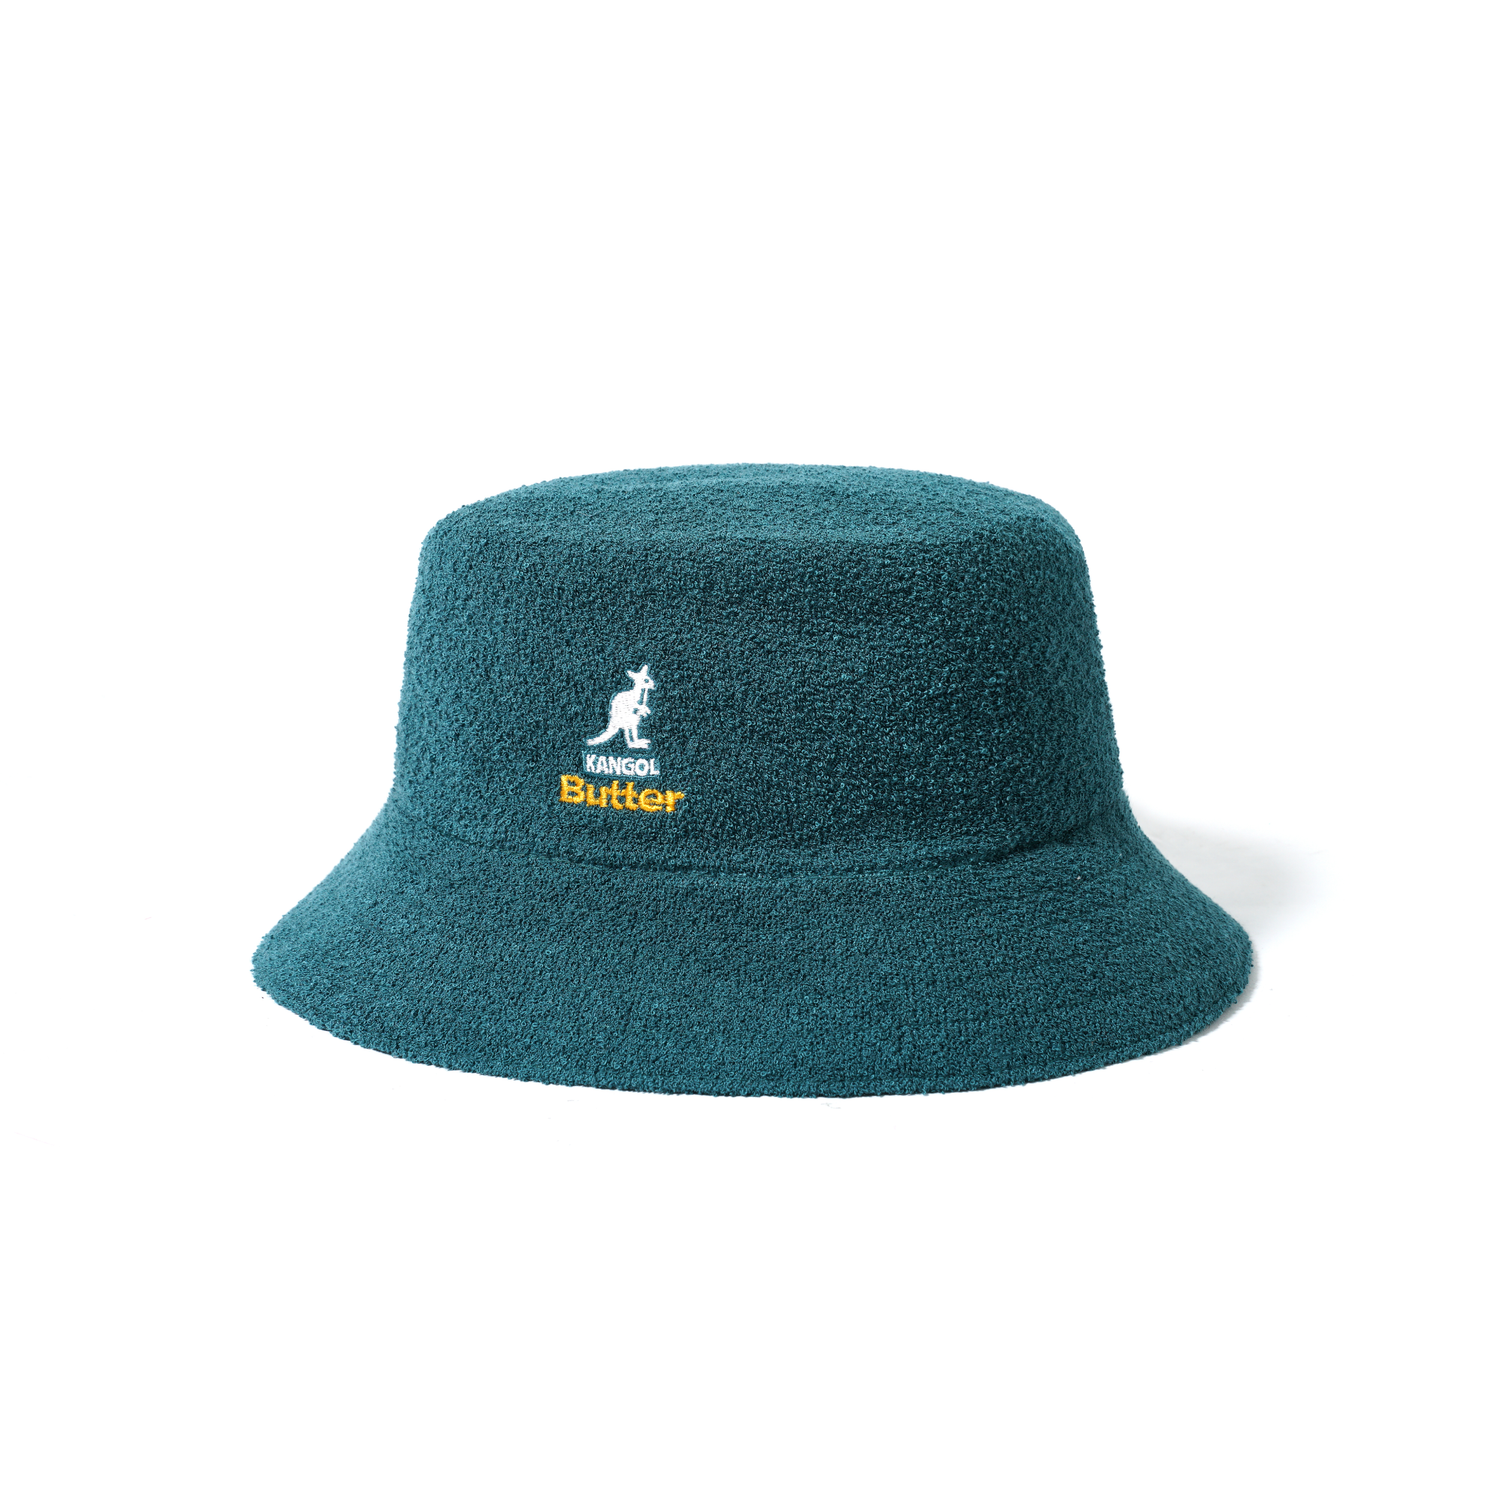 Bermuda Bucket Hat, Forest Green